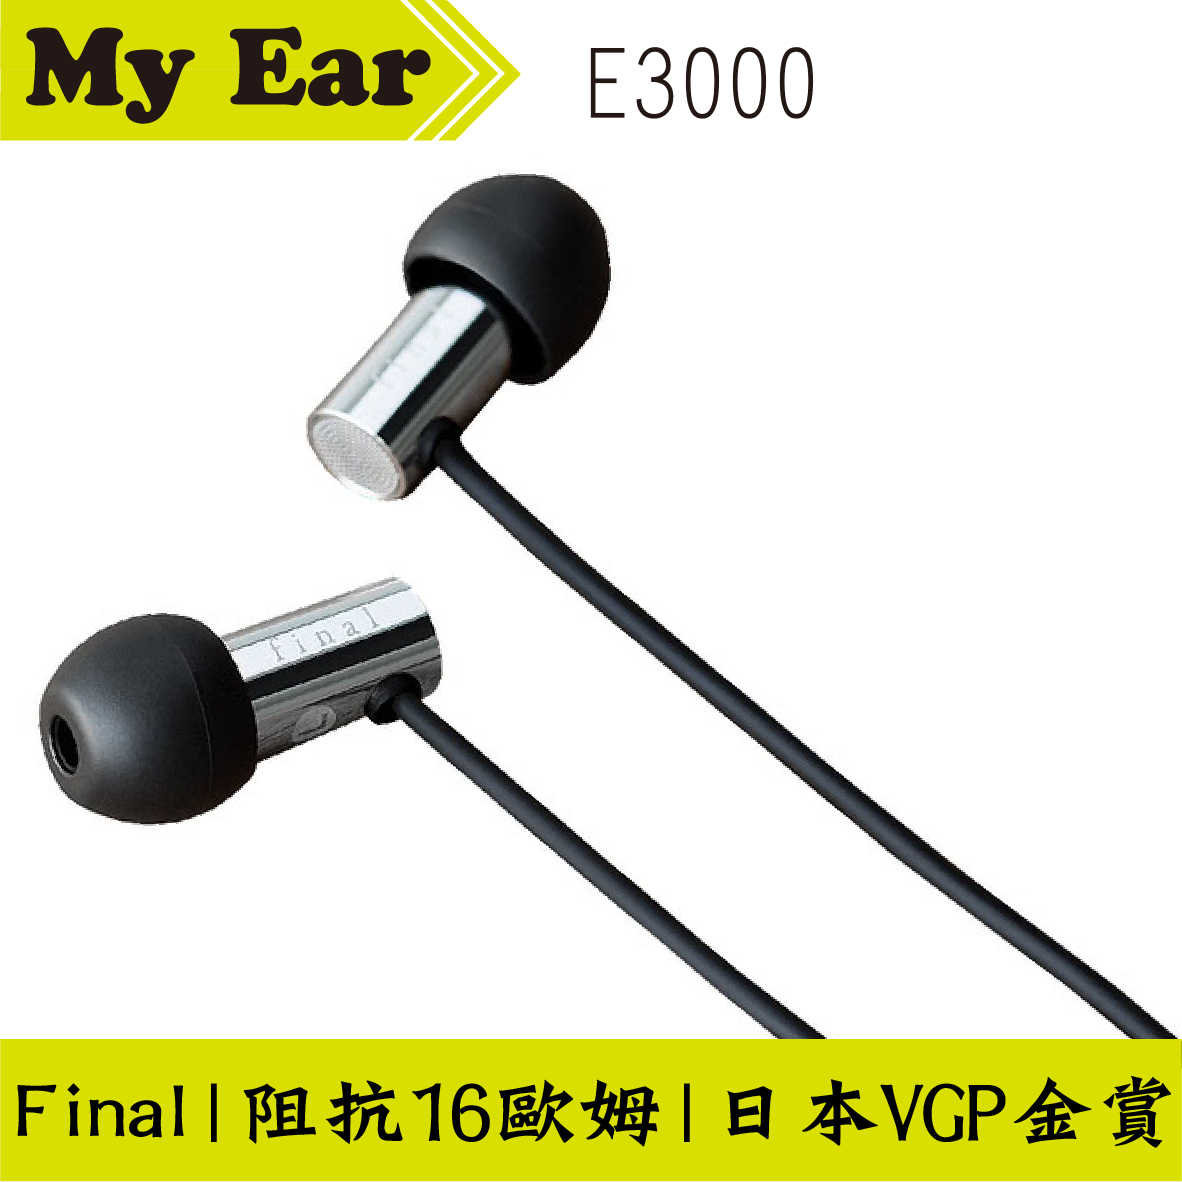 Final E3000 入耳式耳機 日本VGP金賞 | My Ear 耳機專門店 - My Ear 耳機專門店-線上購物| 有閑娛樂電商